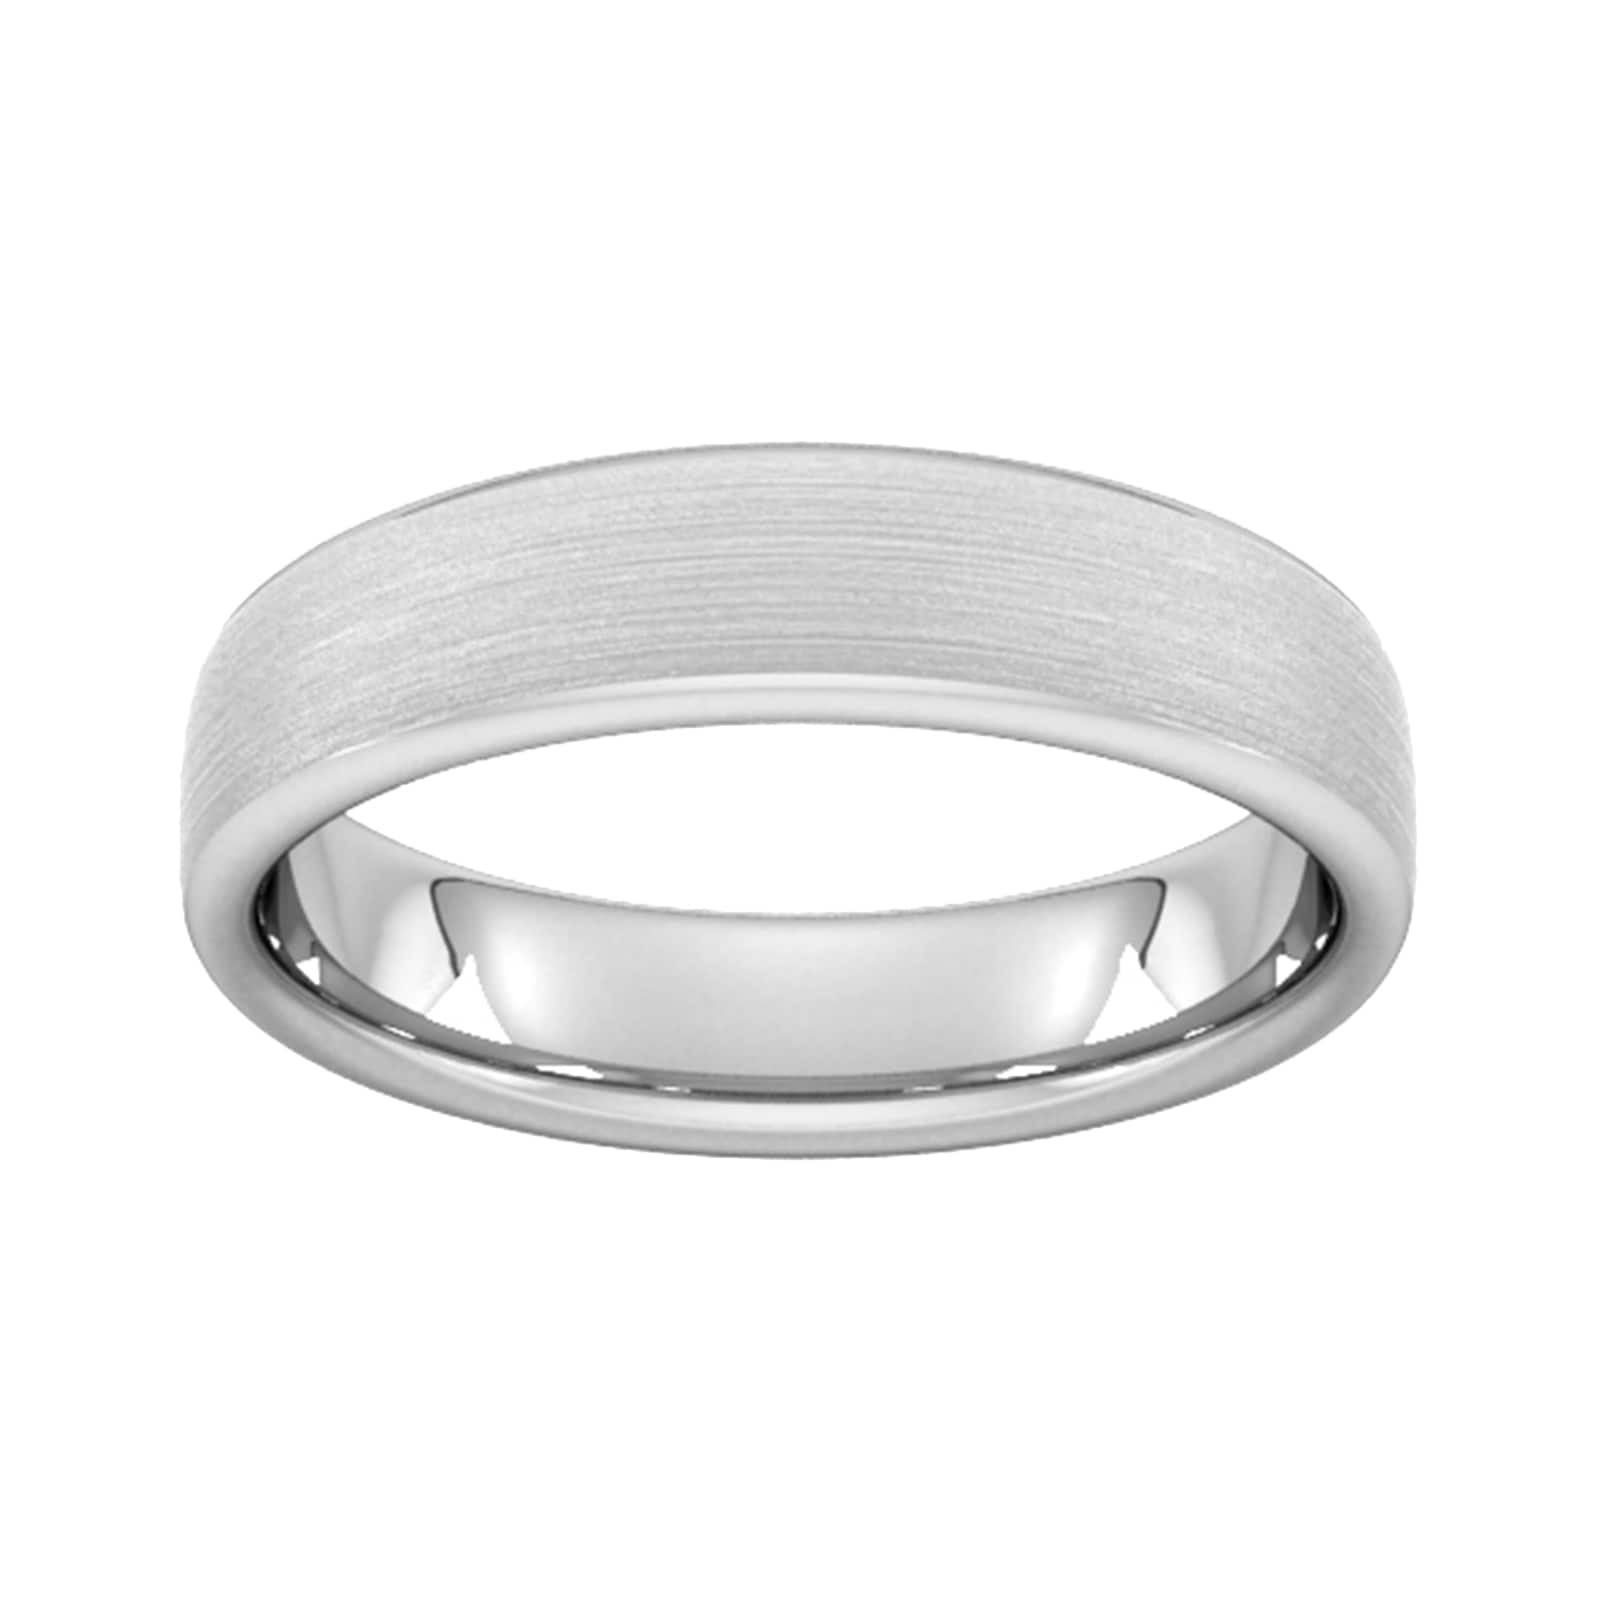 5mm Slight Court Standard Matt Finished Wedding Ring In 950 Palladium - Ring Size Q